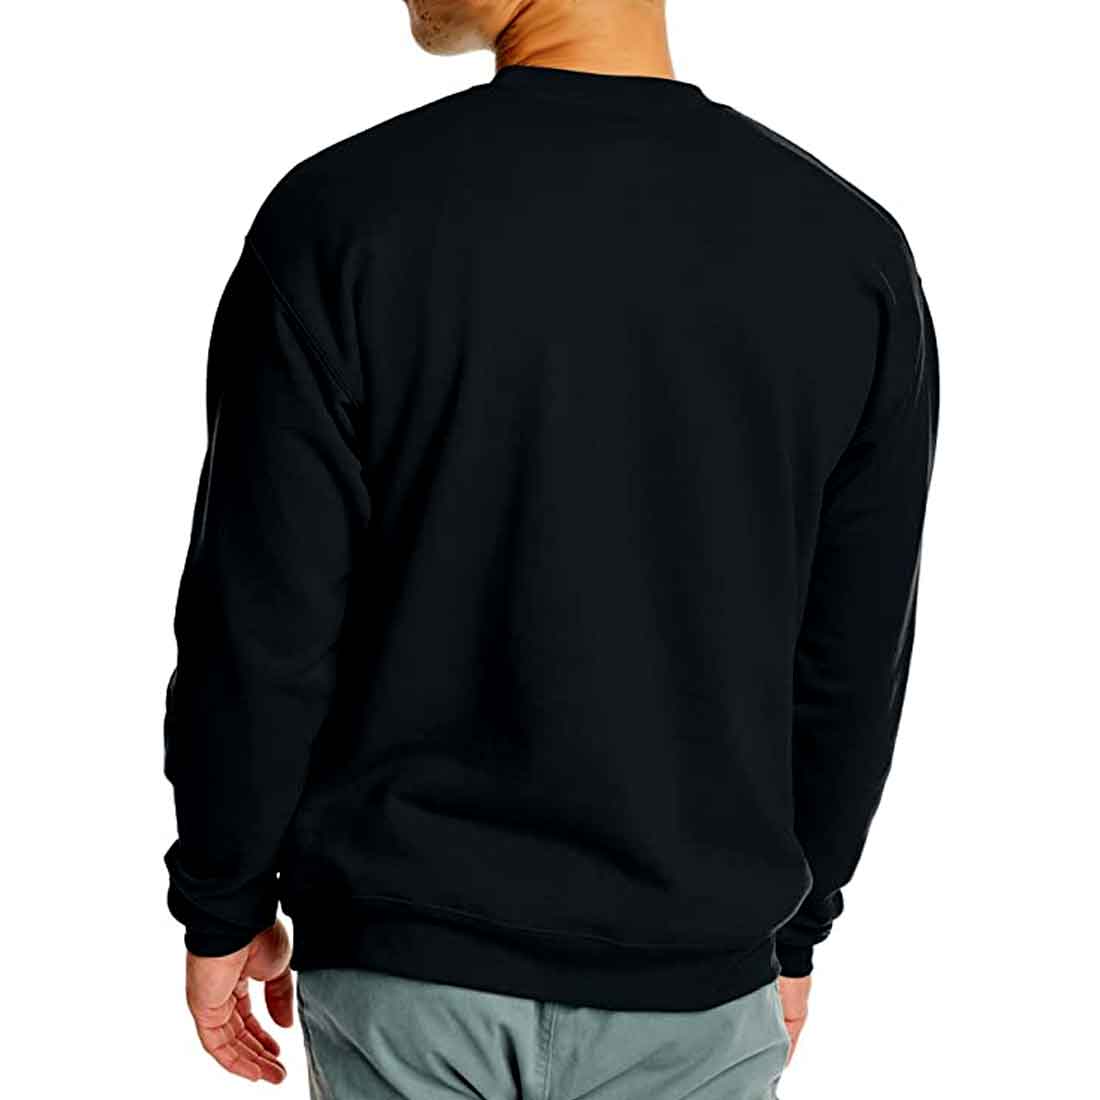 Black Sweatshirt Full Sleeve Stylish Latest for Unisex - Taurus